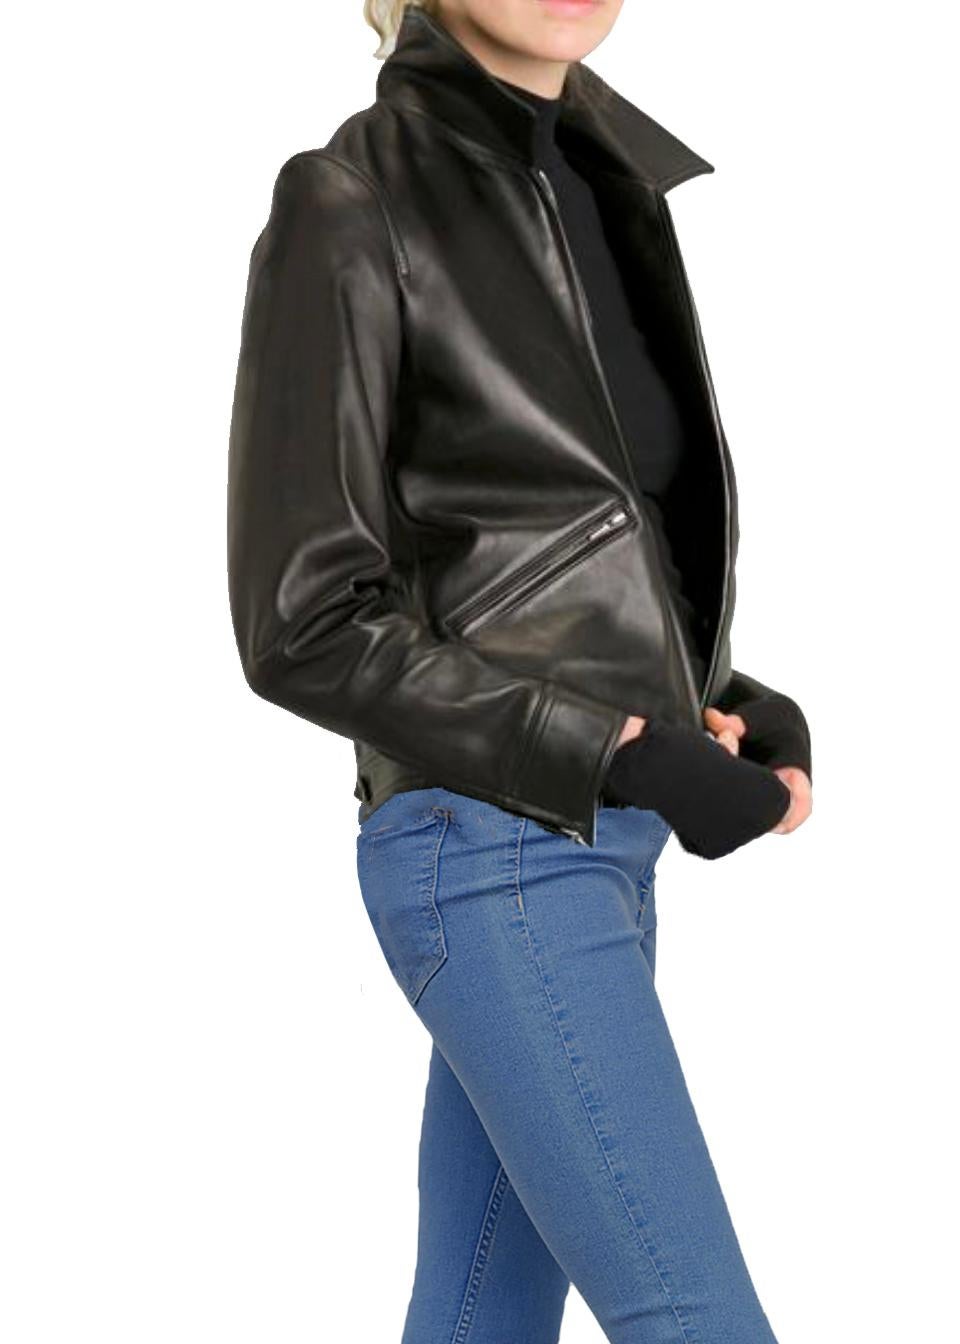 agnes b leather jacket